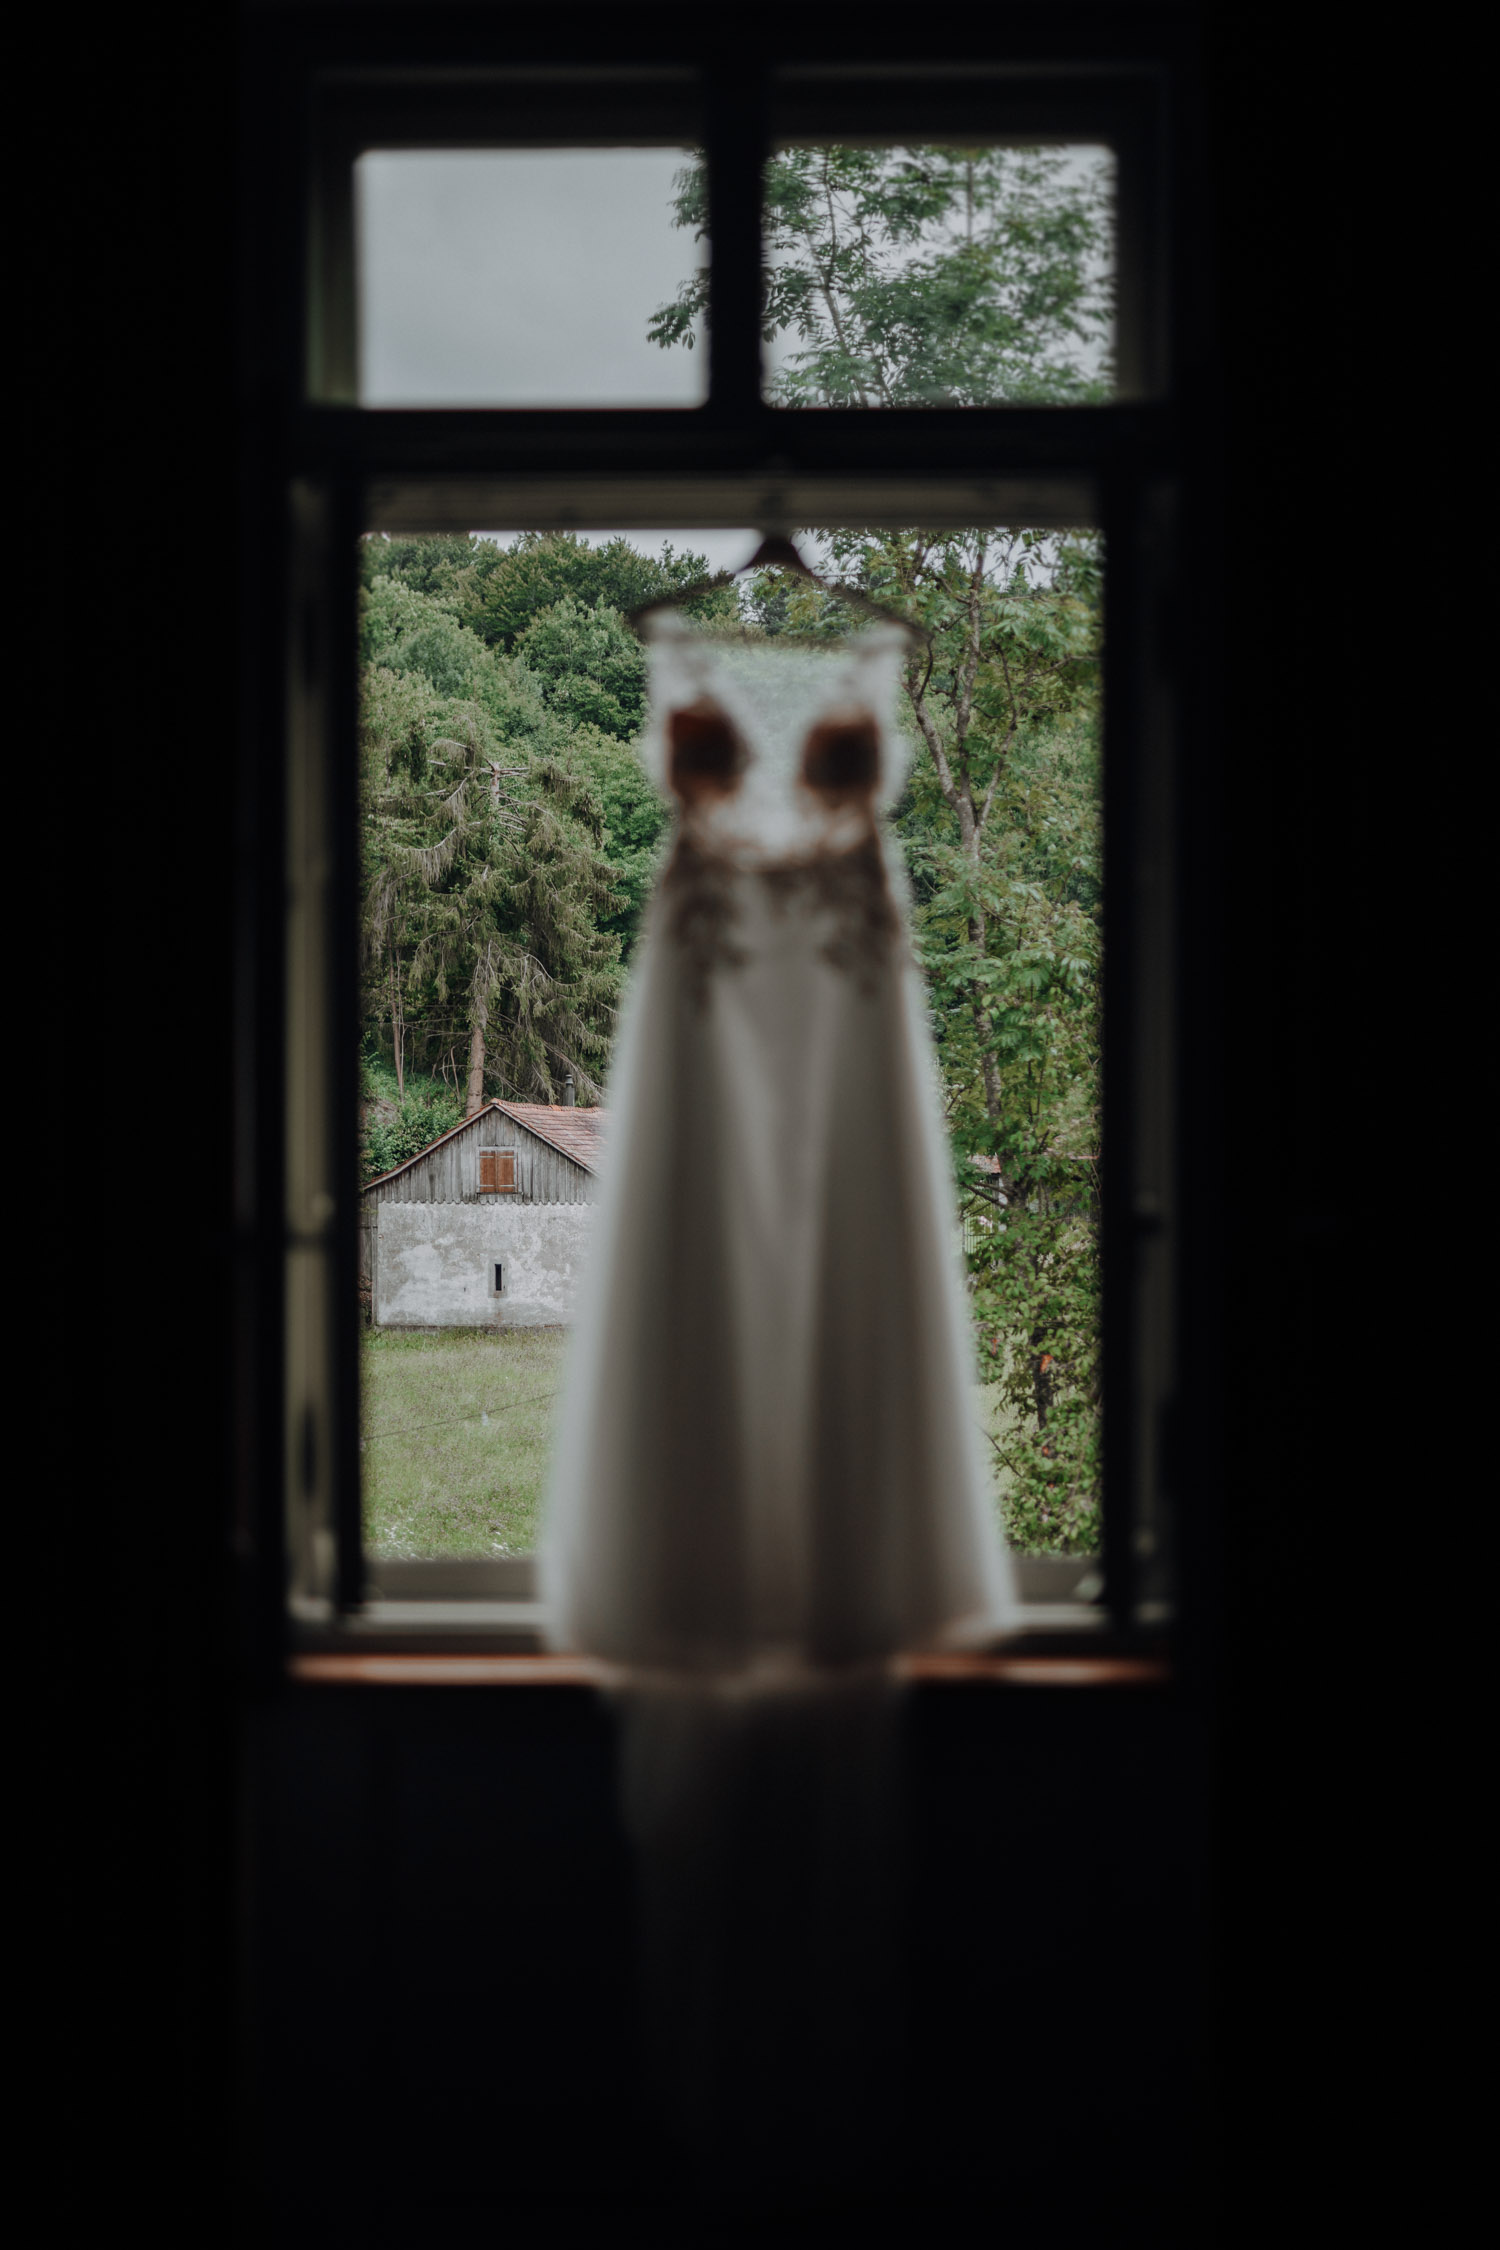 Brautkleid im Fenster Komturei Tobel